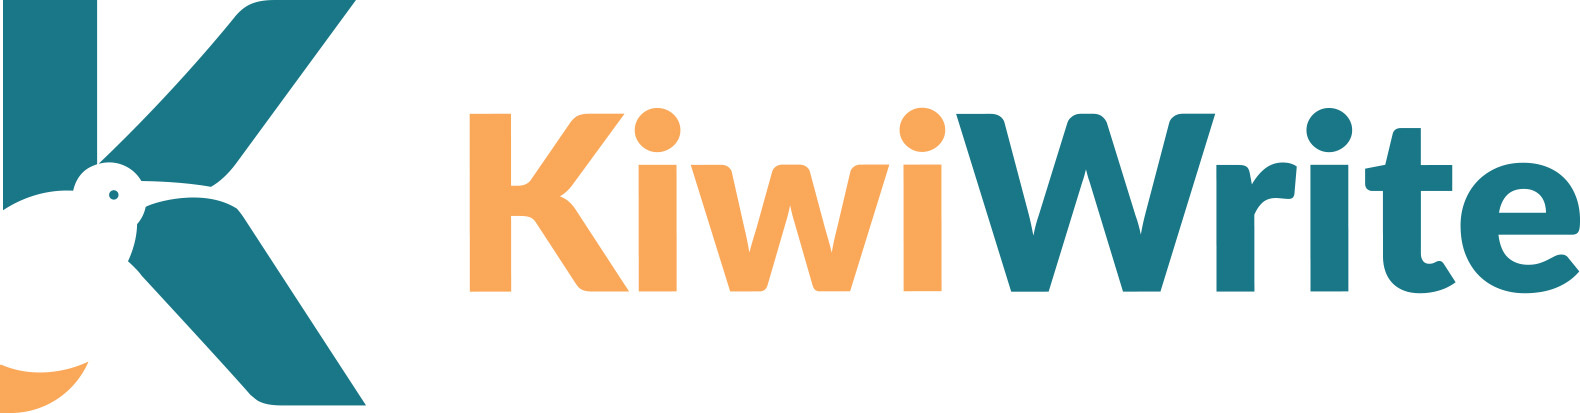 KiwiWrite logo